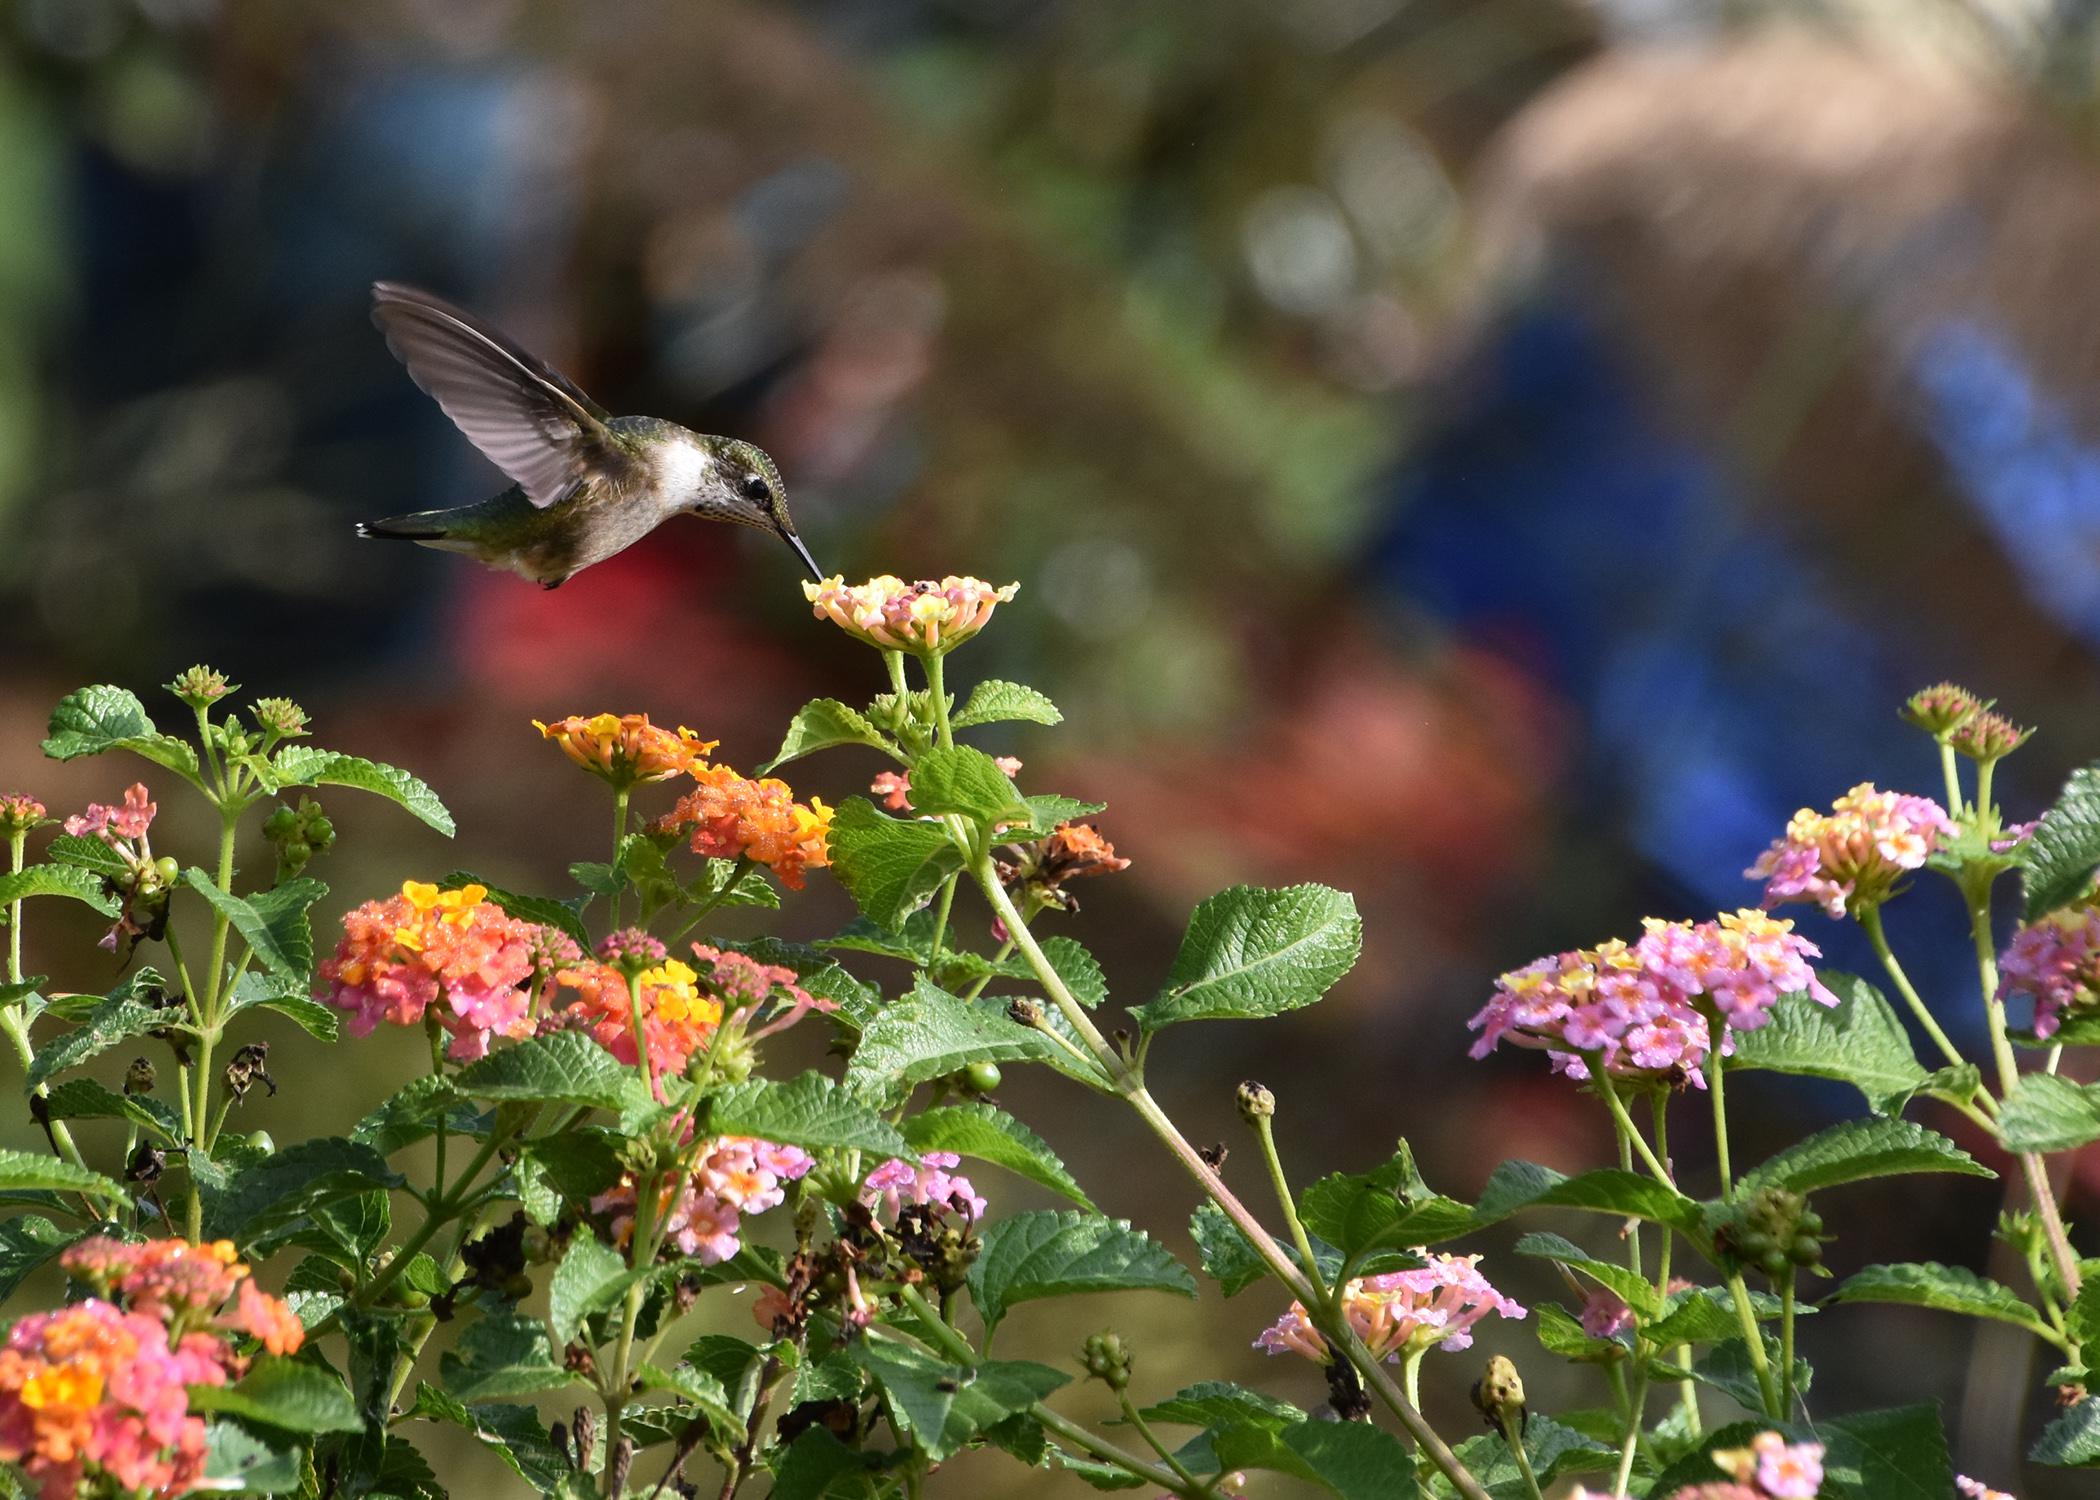 A single hummingbird drinks from a flower.